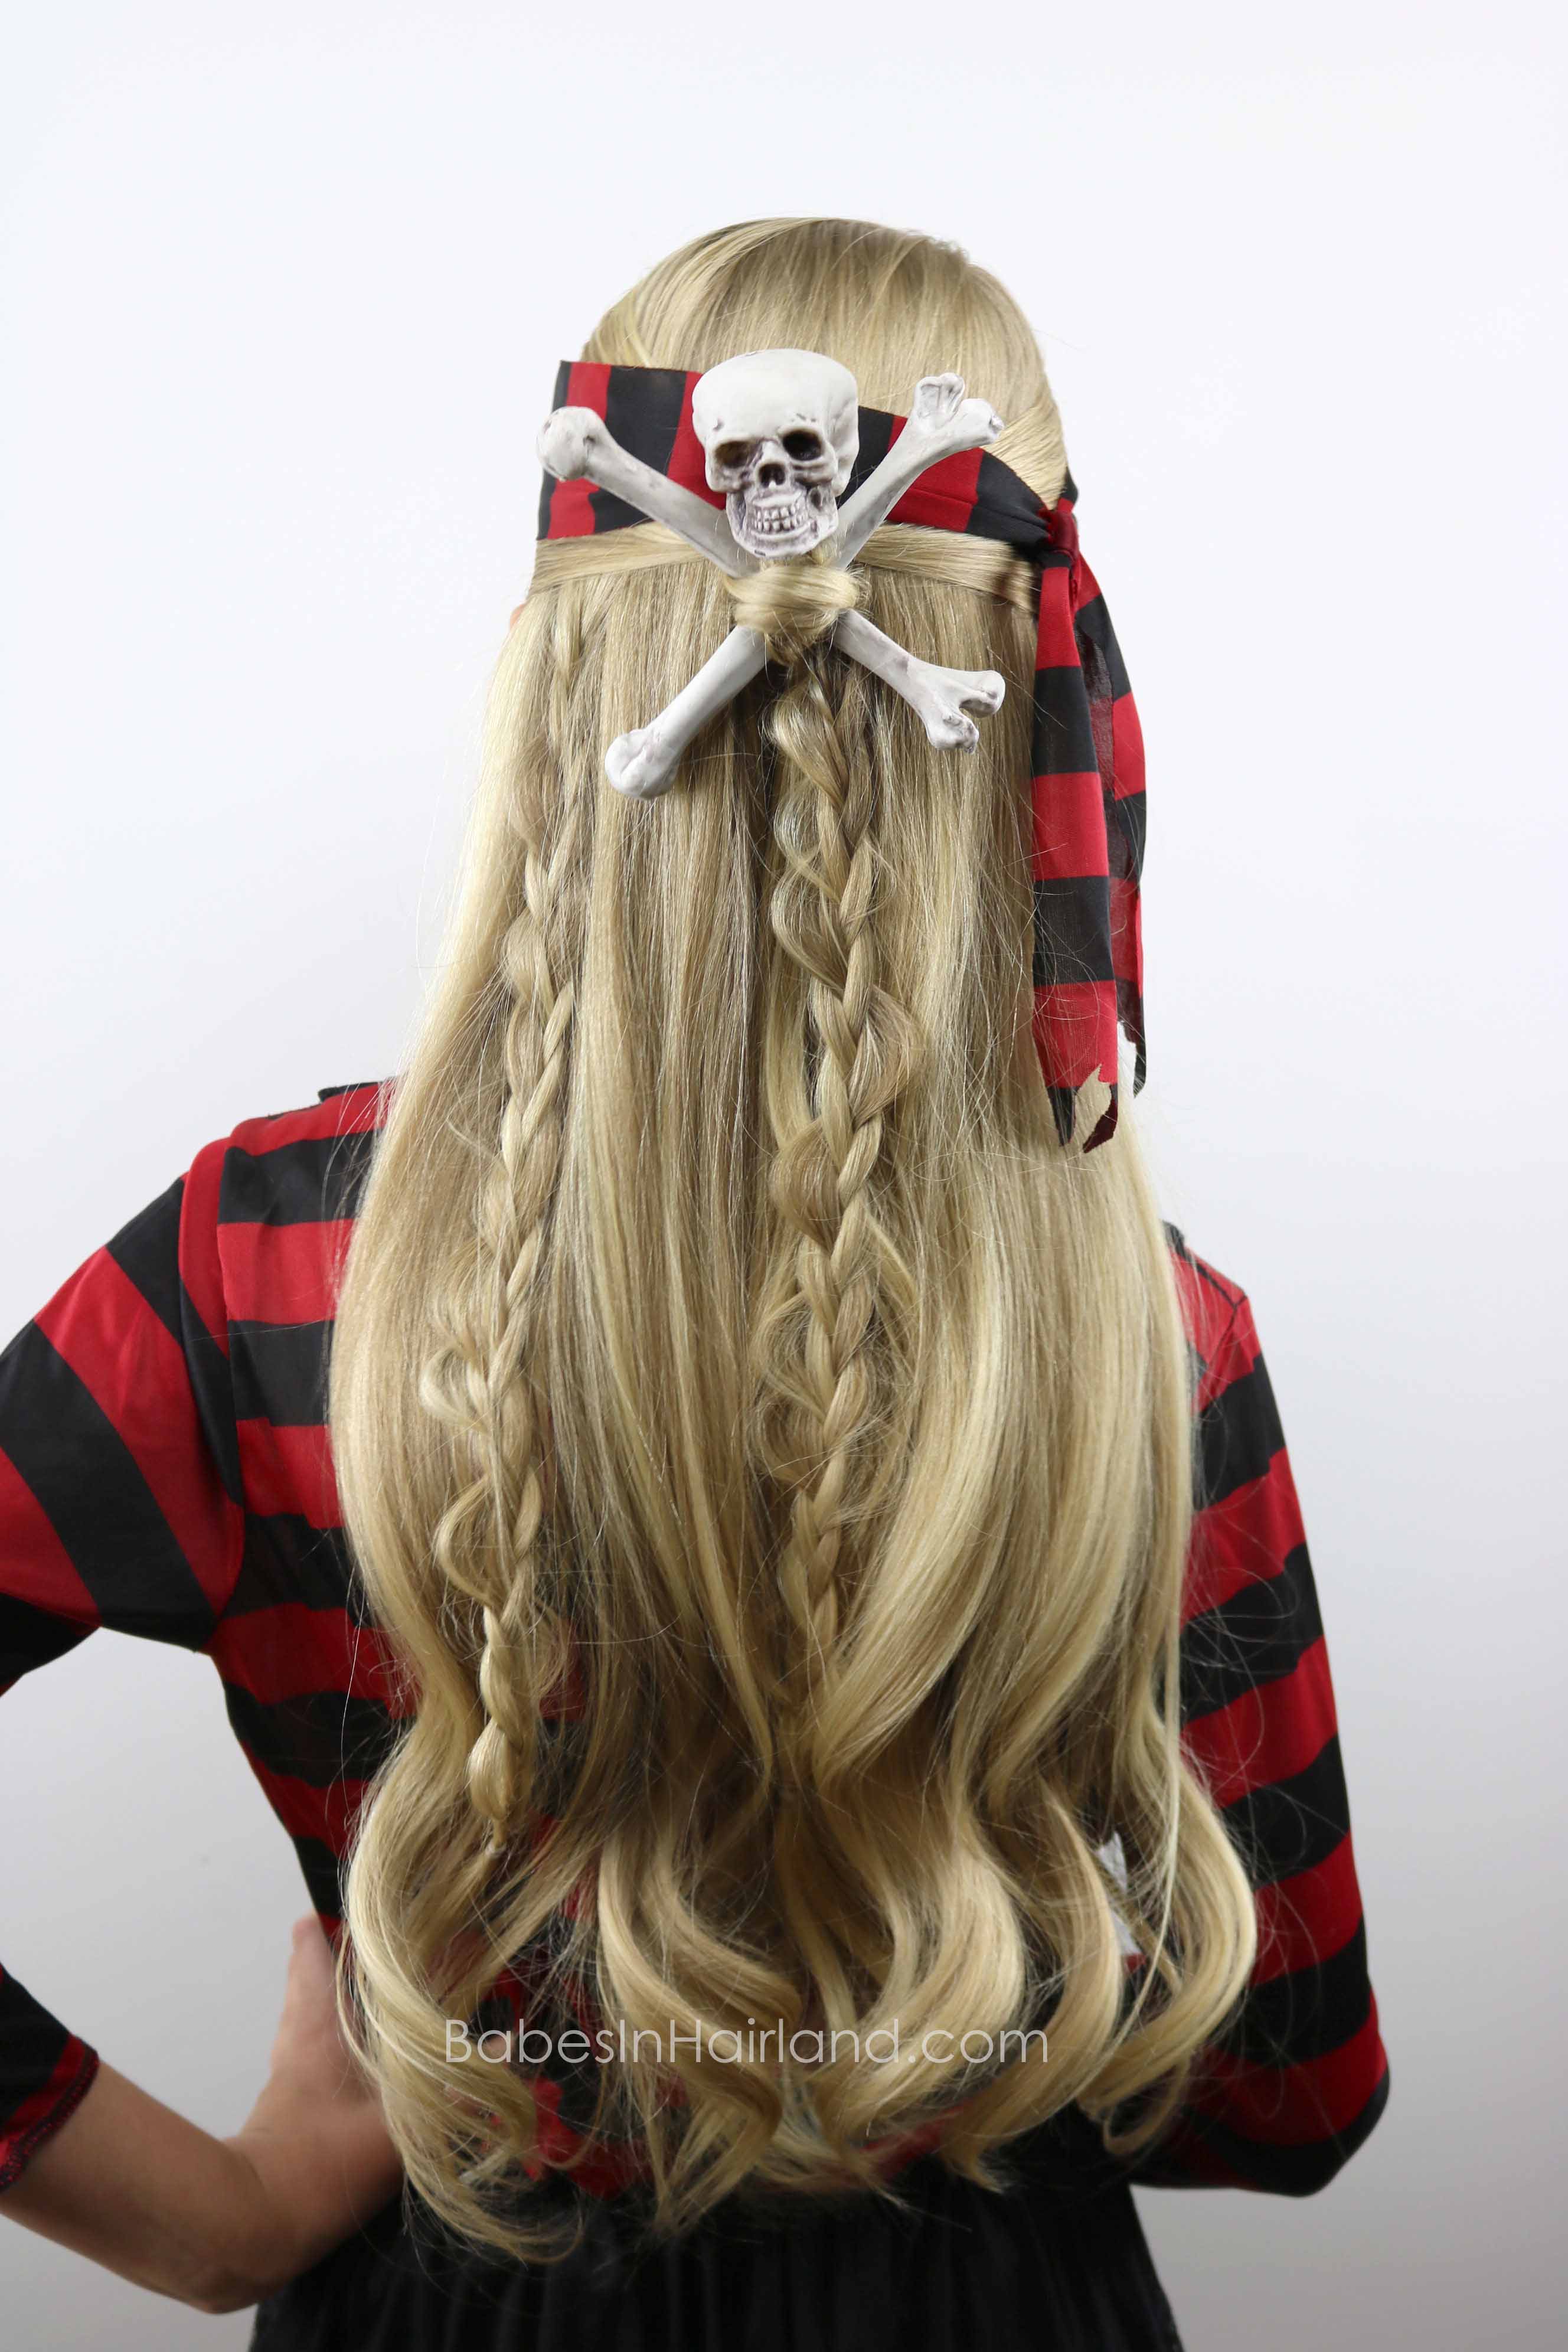 Skull Crossbones Pirate Hair Halloween Hairstyle Babes In Hairland